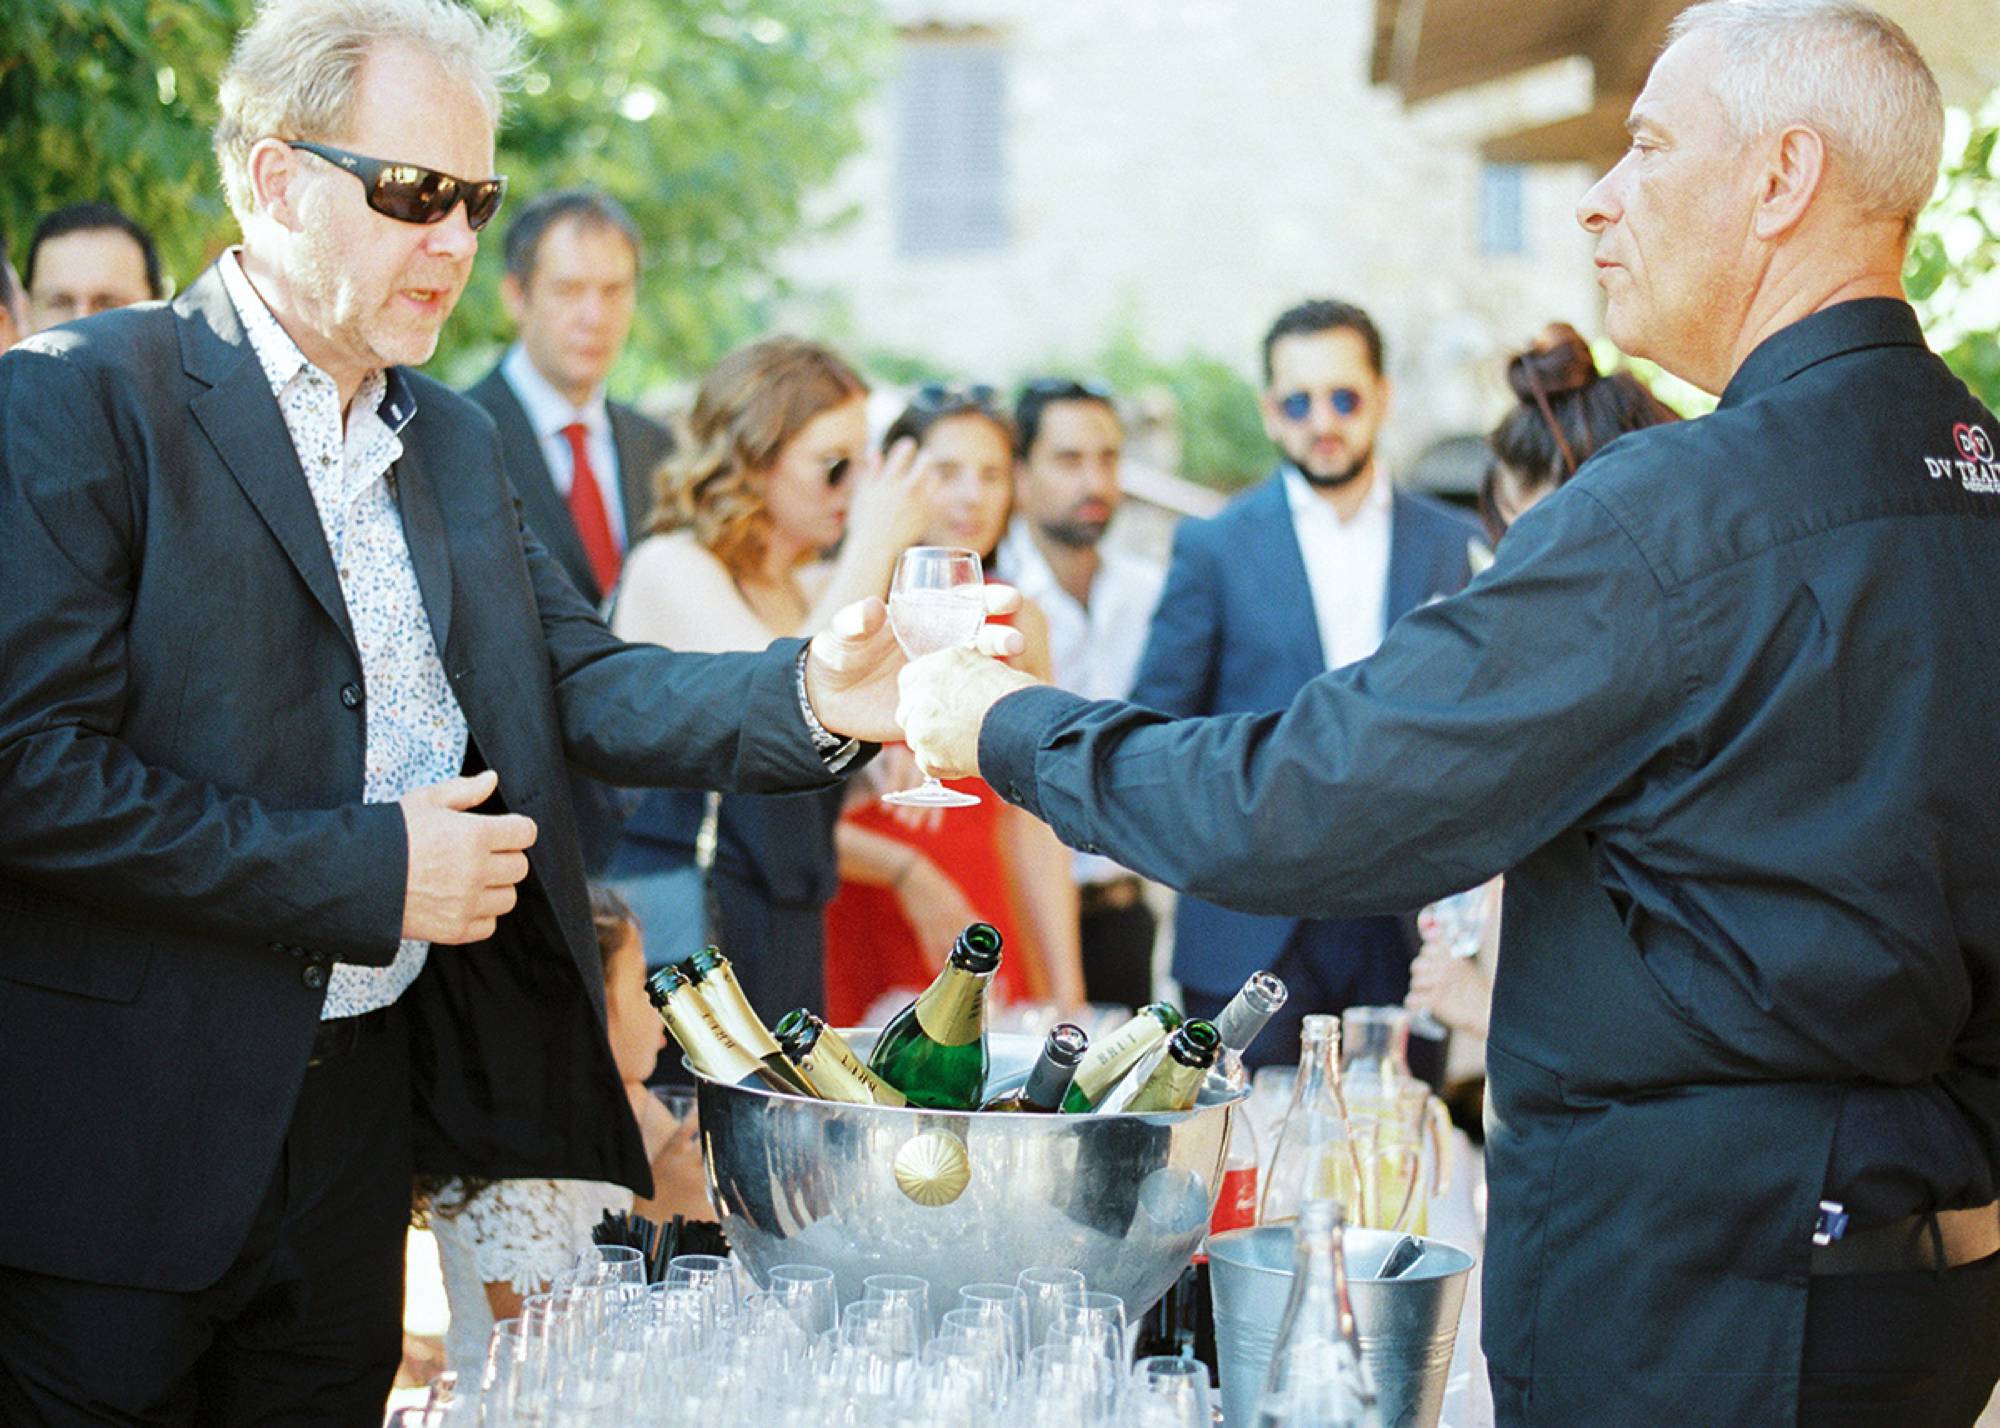 Wedding photographer Provence - Wedding reception